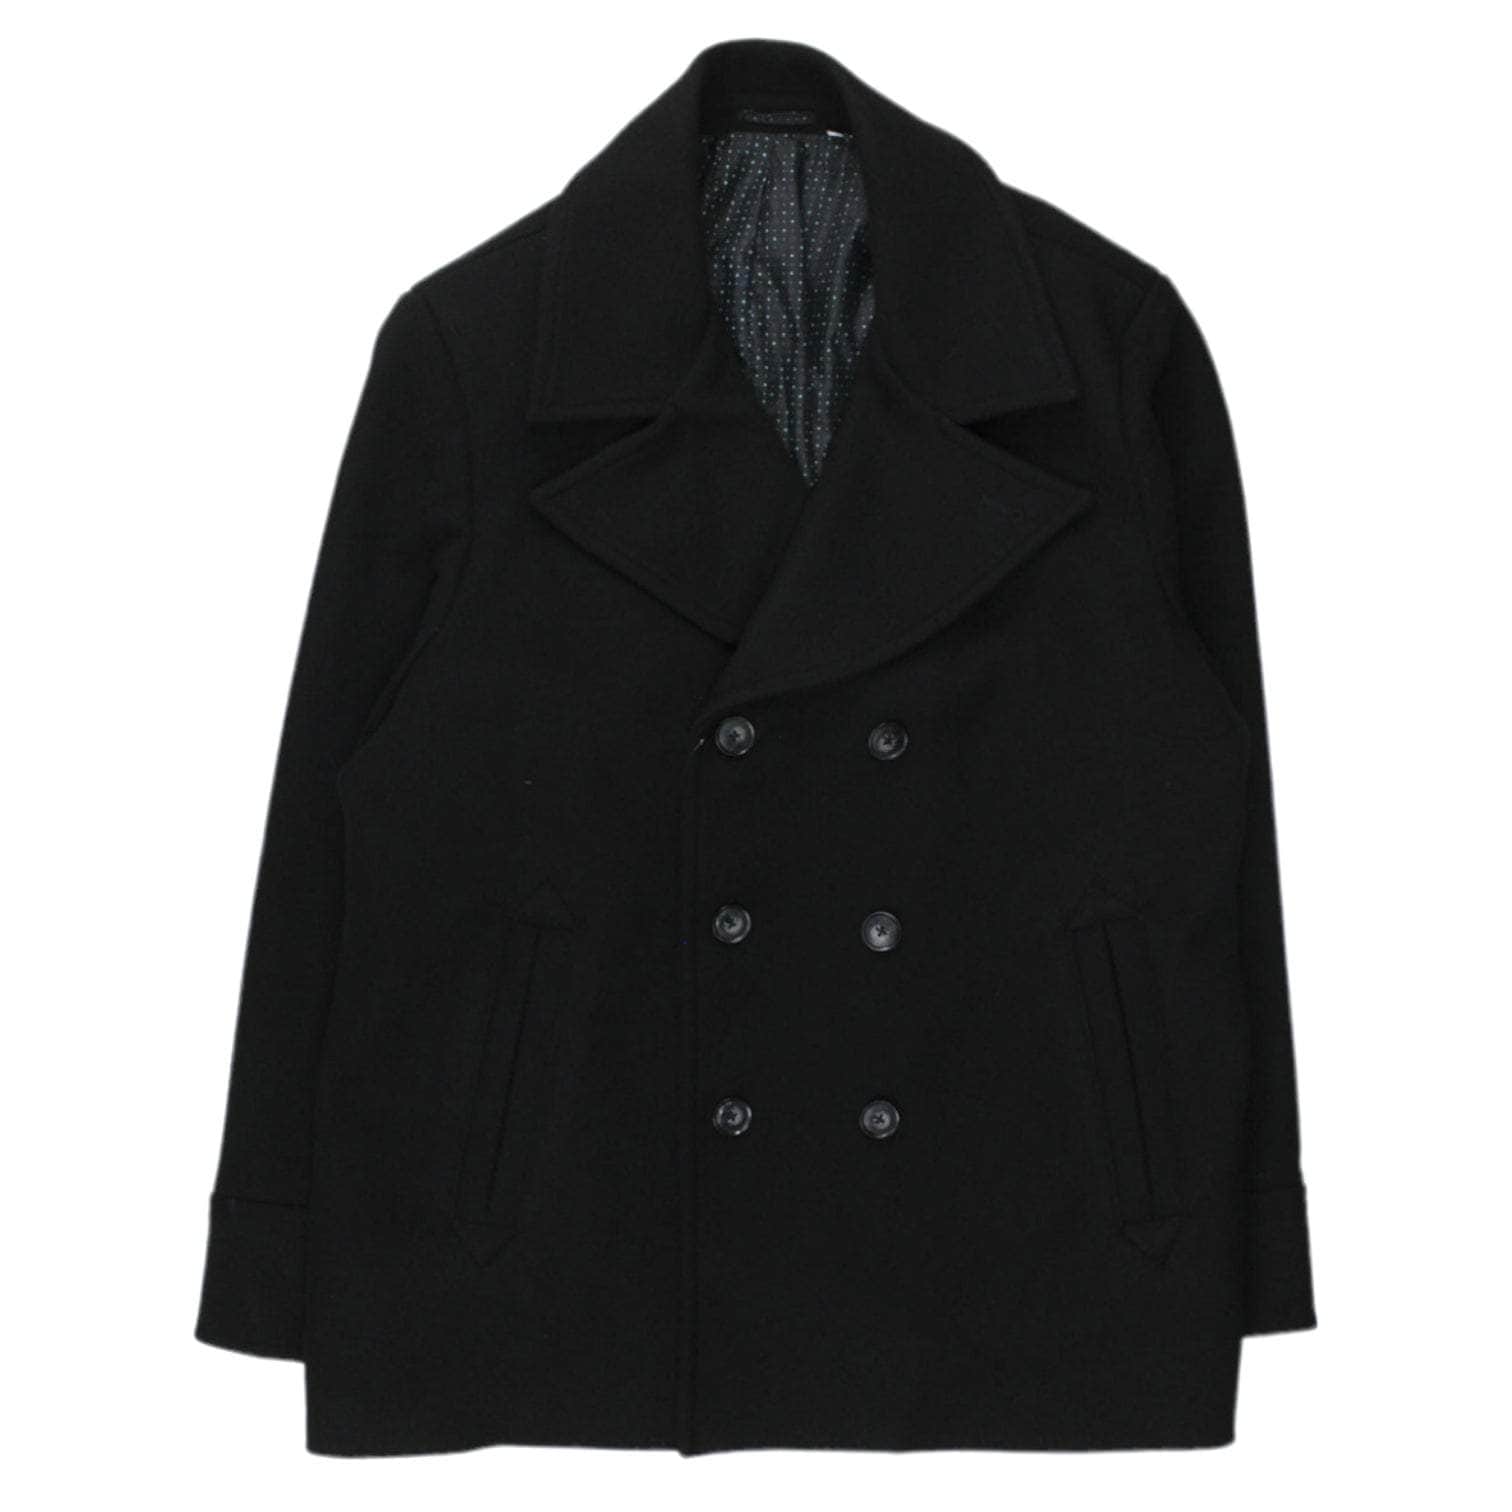 Burton Black Lined Pea Coat